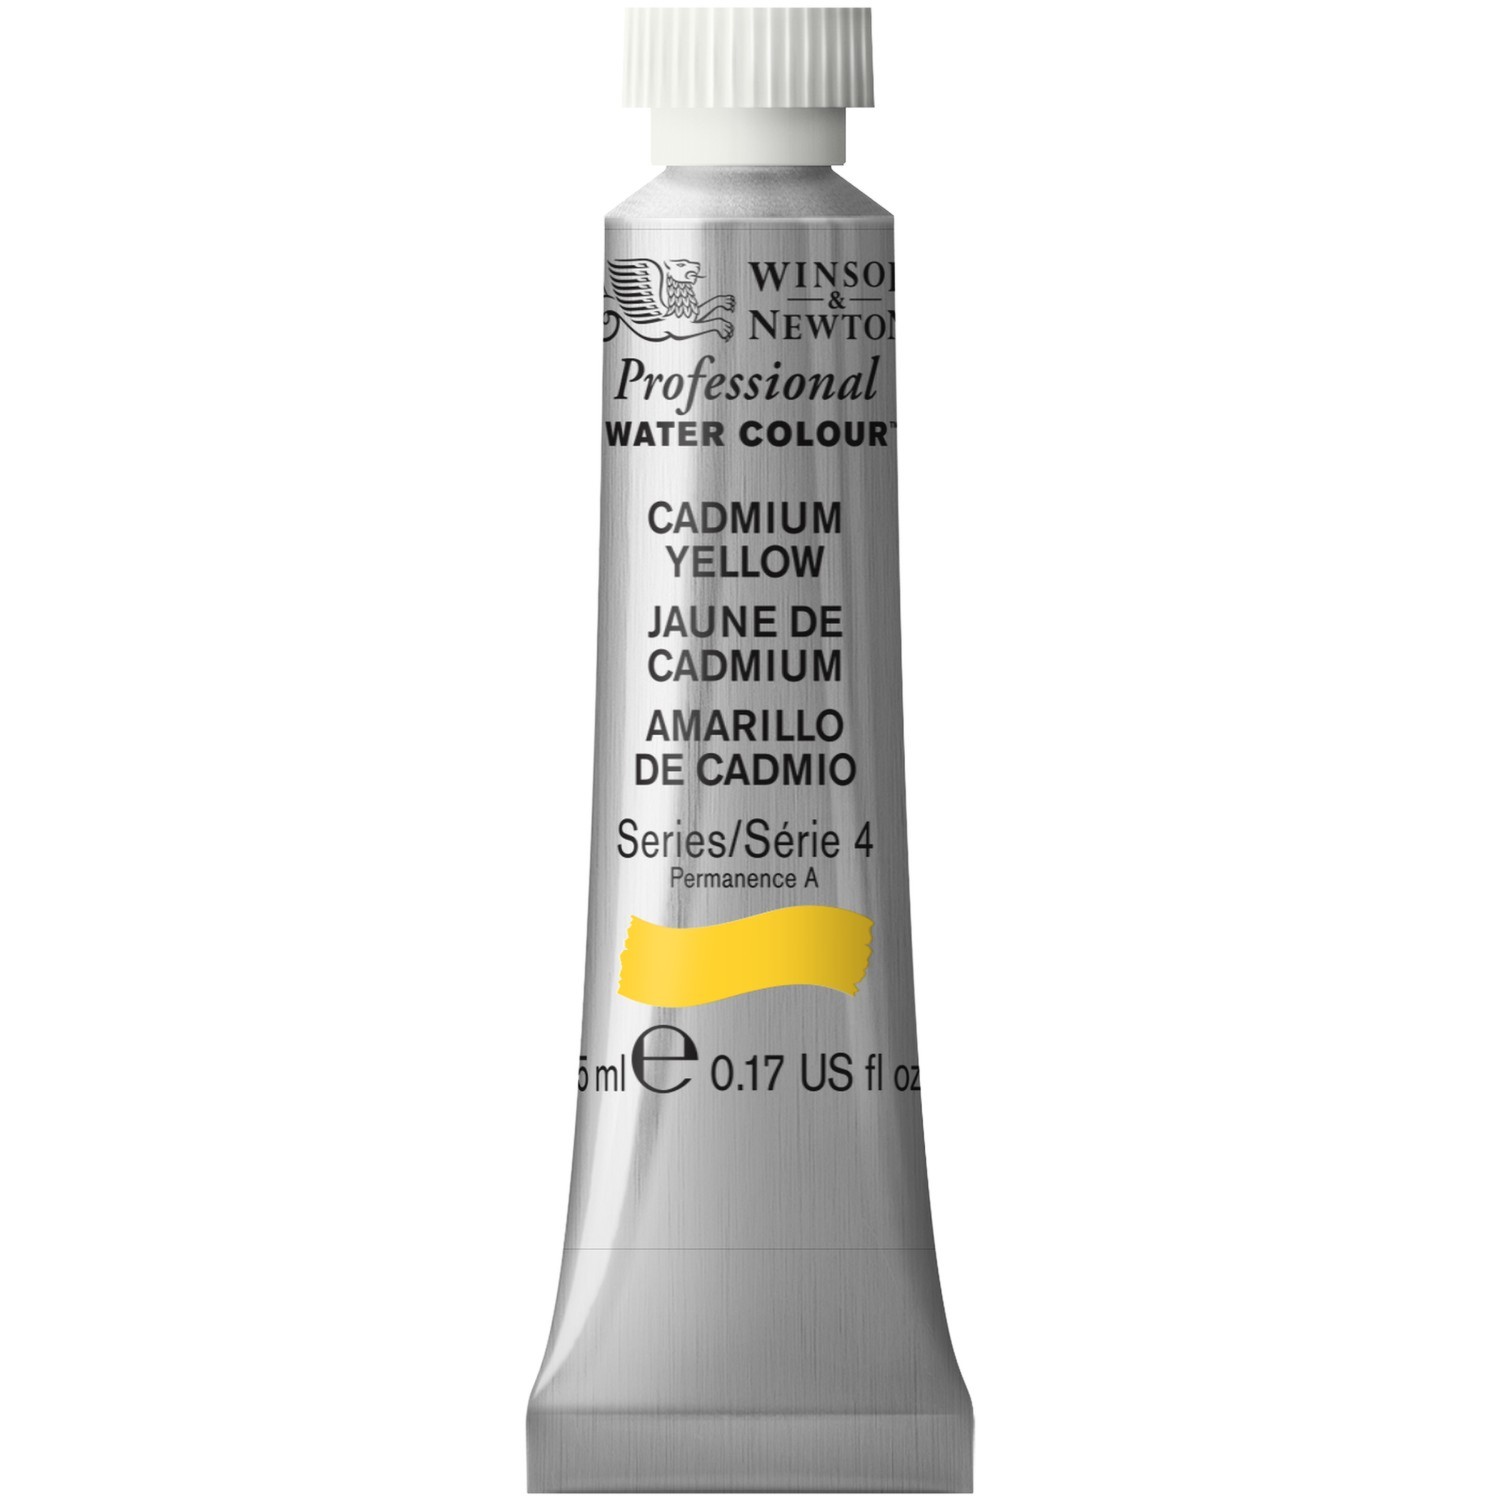 Winsor and Newton 5ml Professional Watercolour Paint - Cadium Yellow Image 1